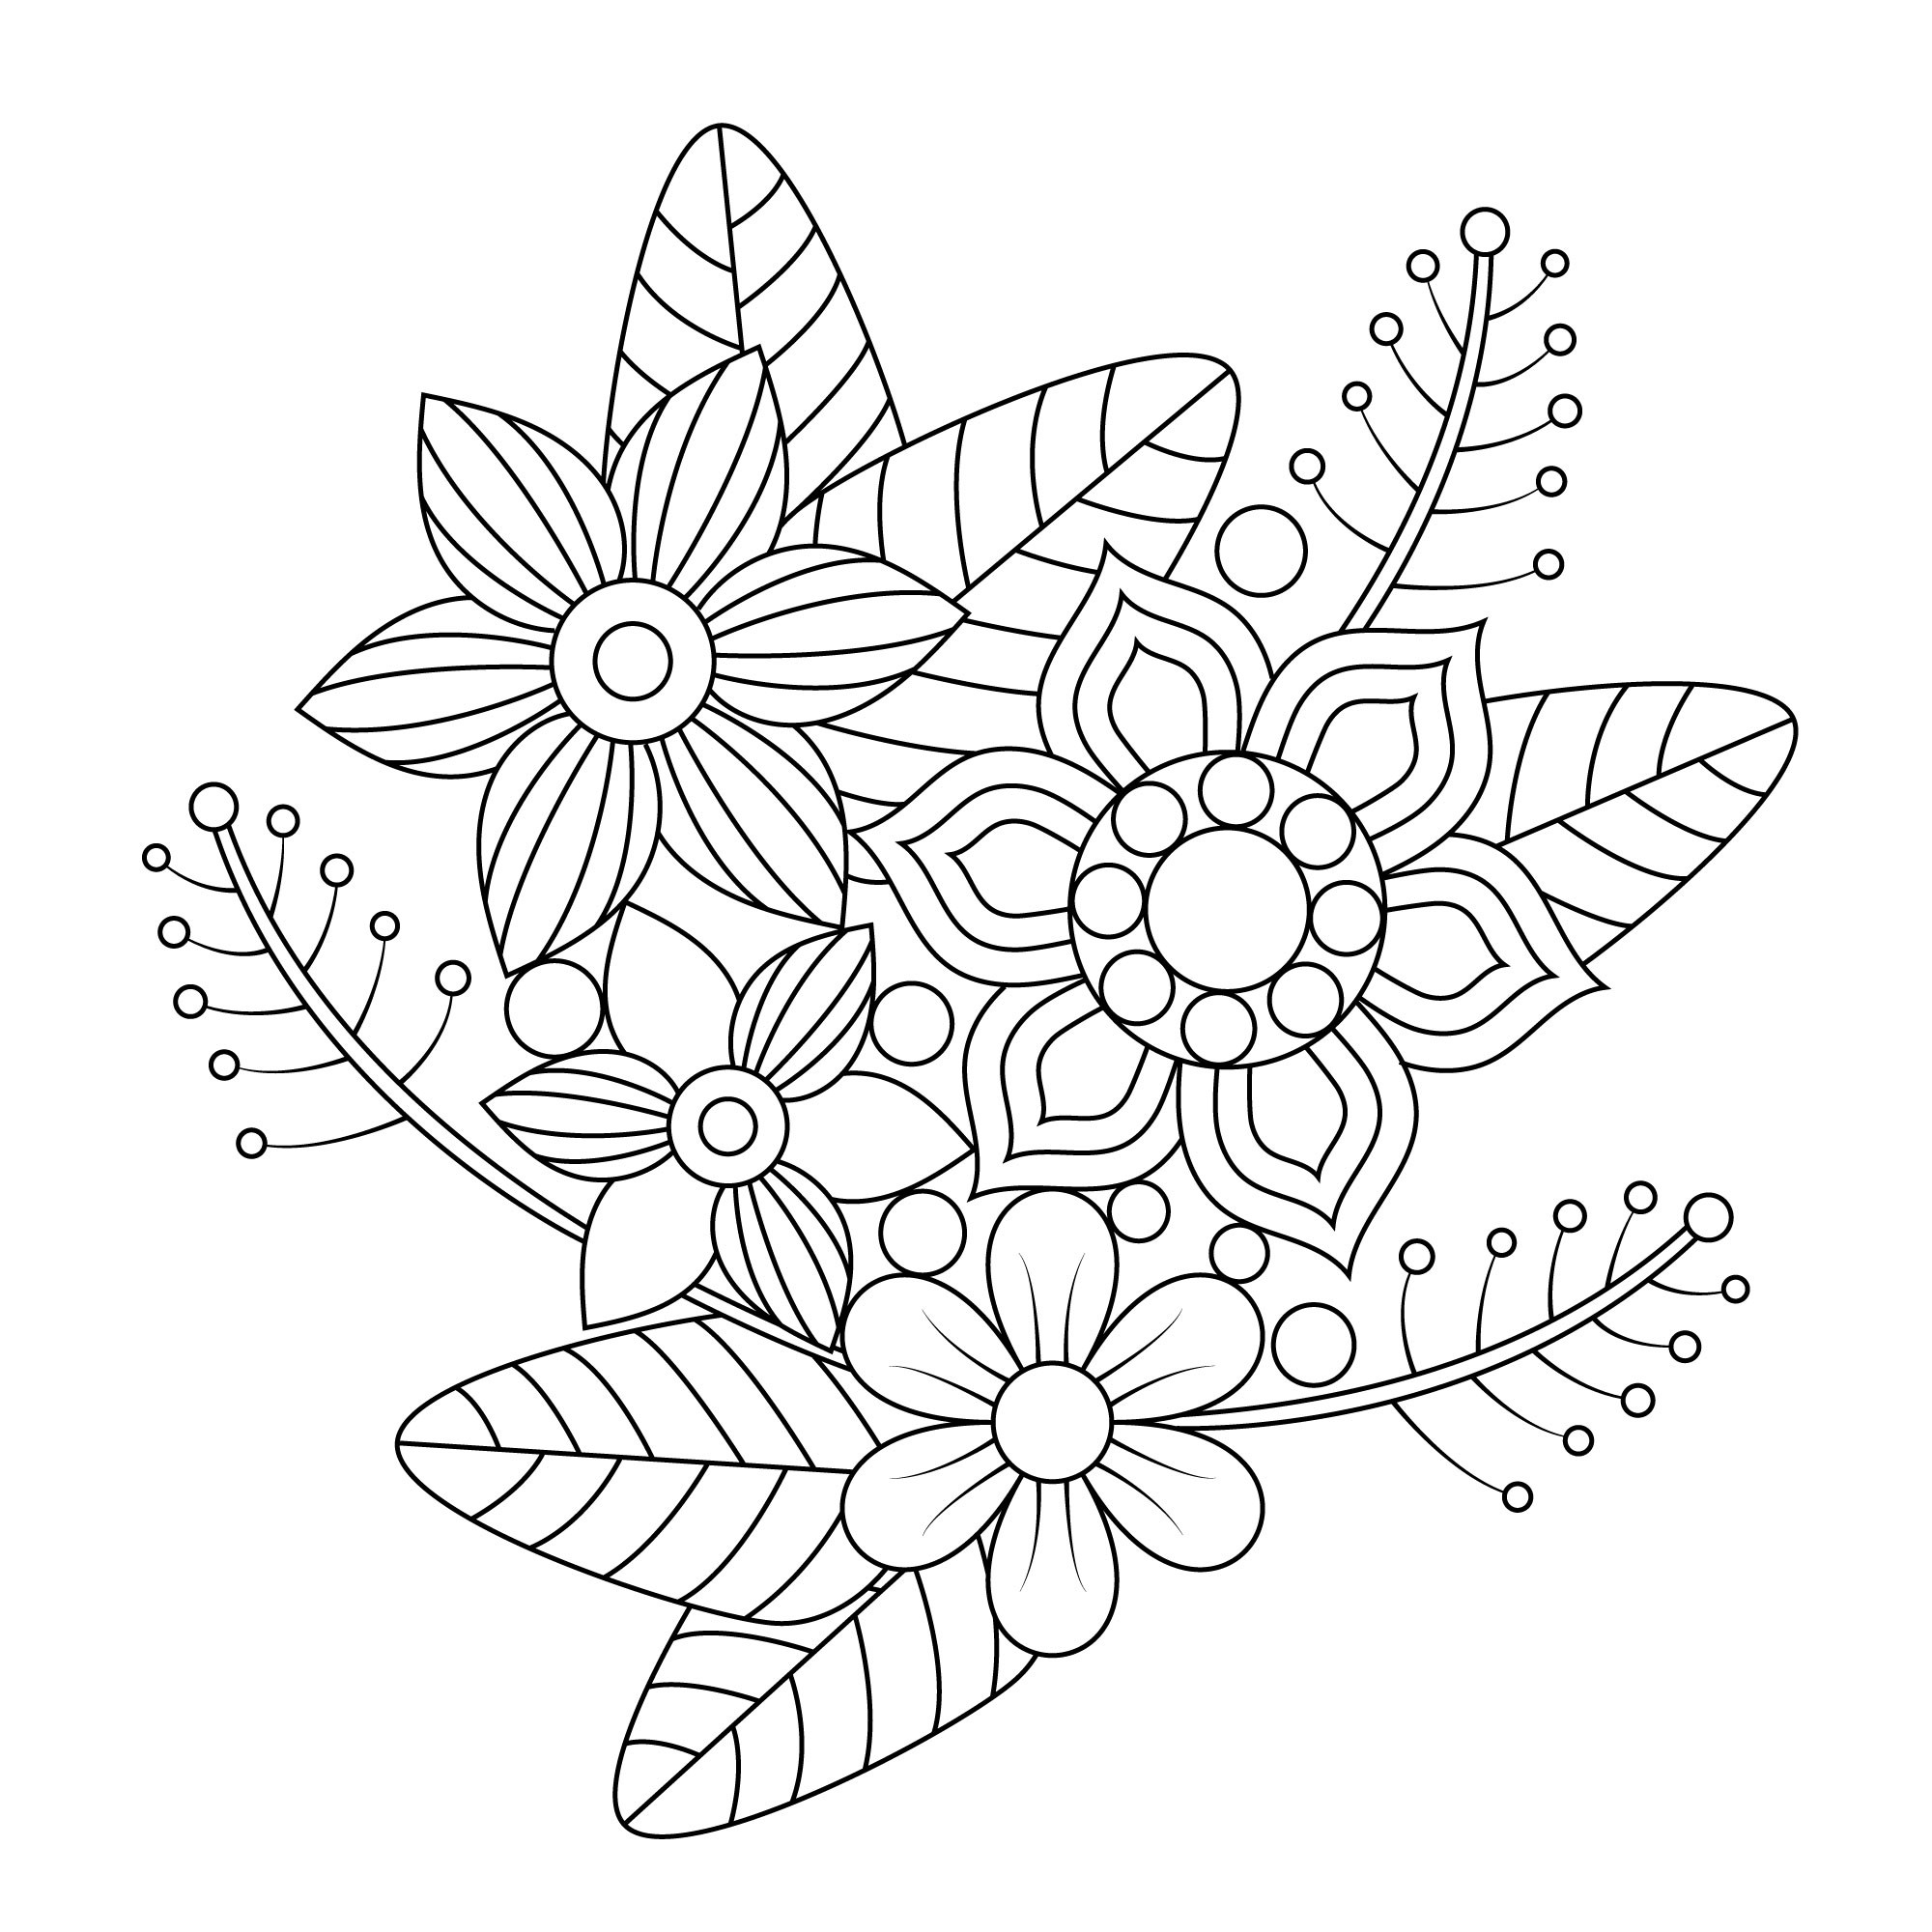 Раскраска для детей: мандала цветок